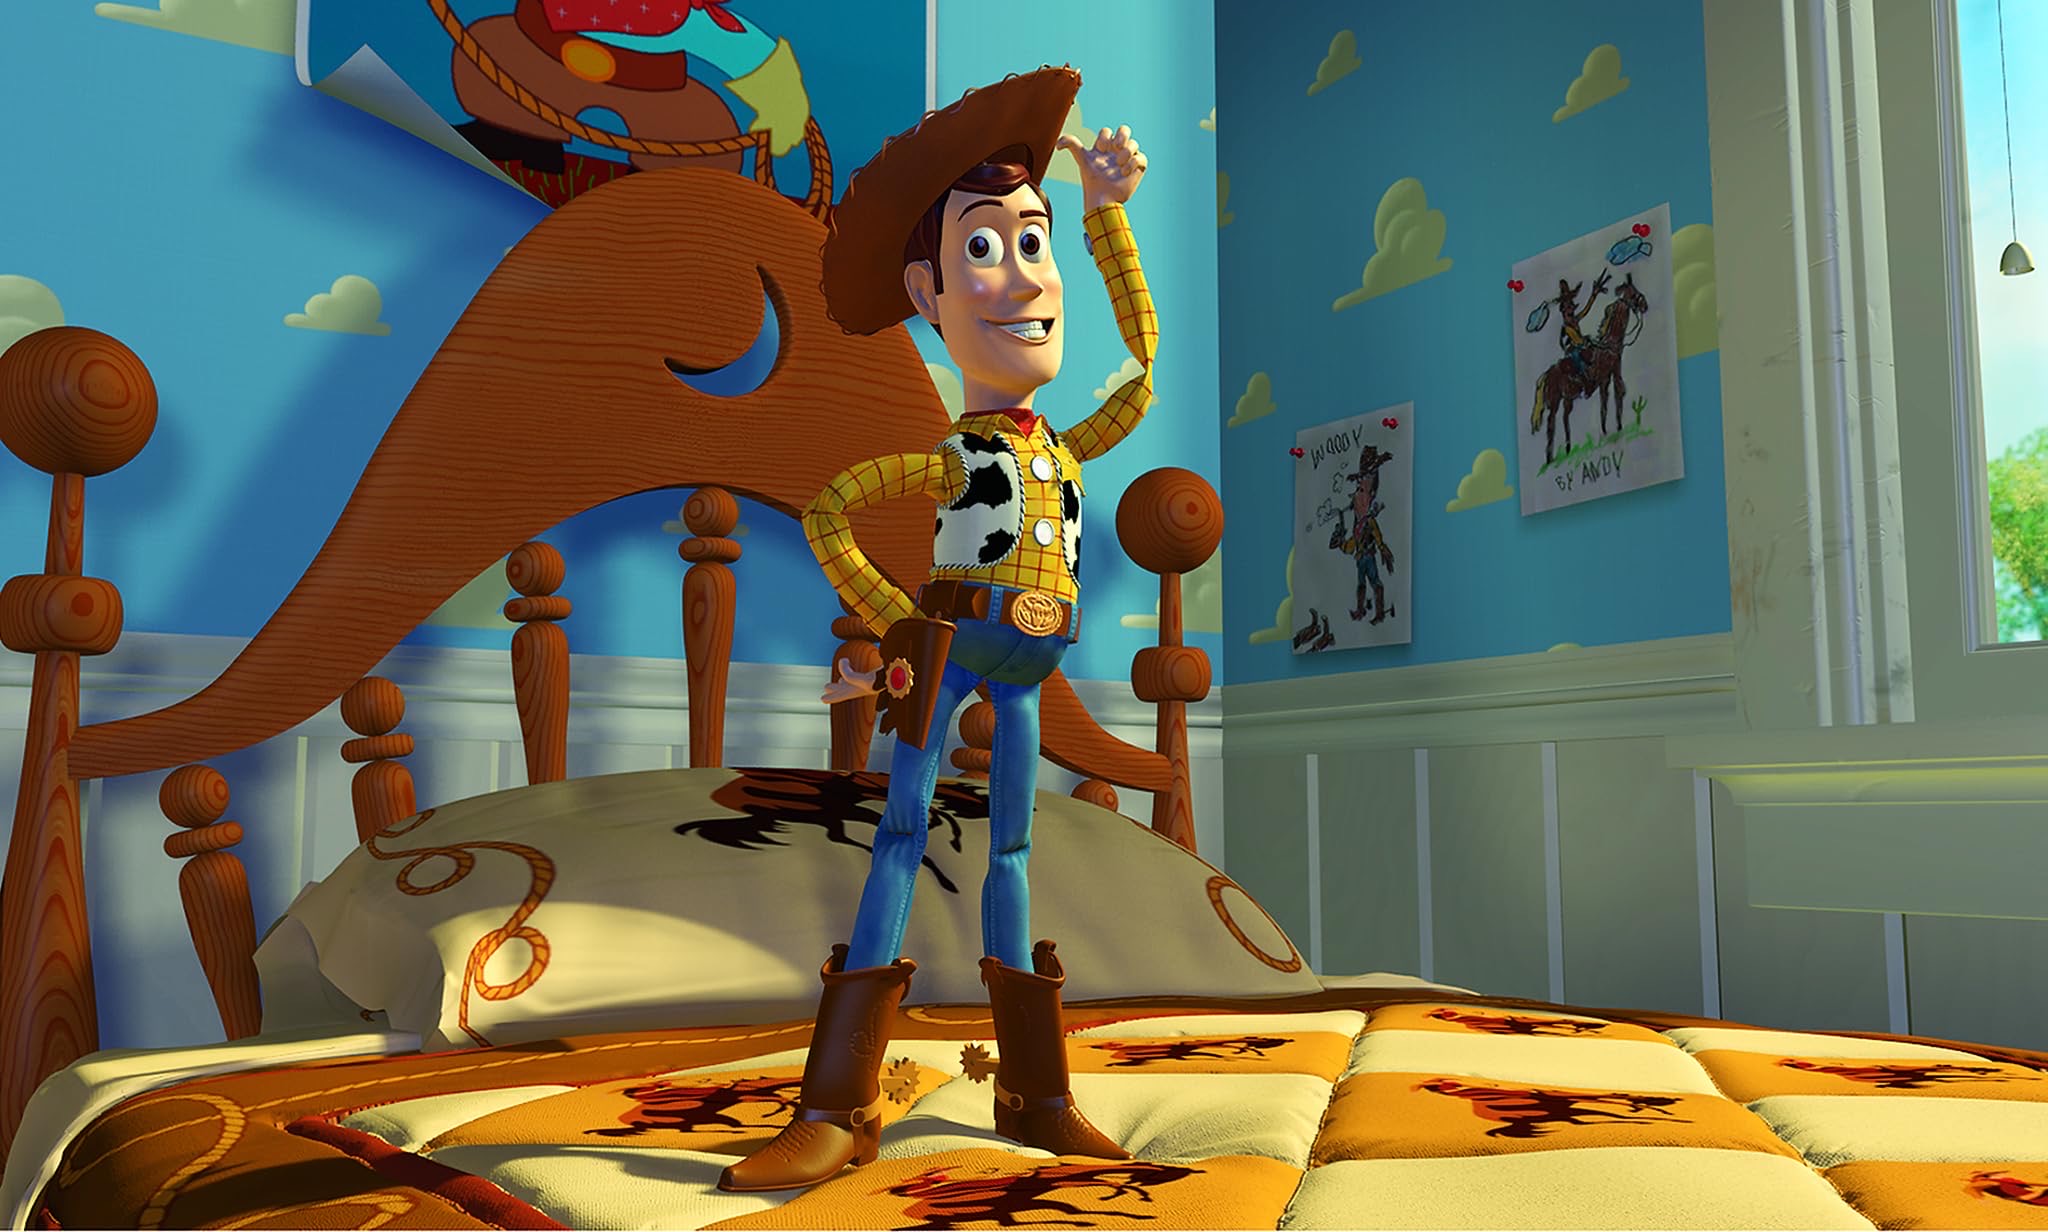 Woody (Toy Story) PNG by jakeysamra on DeviantArt